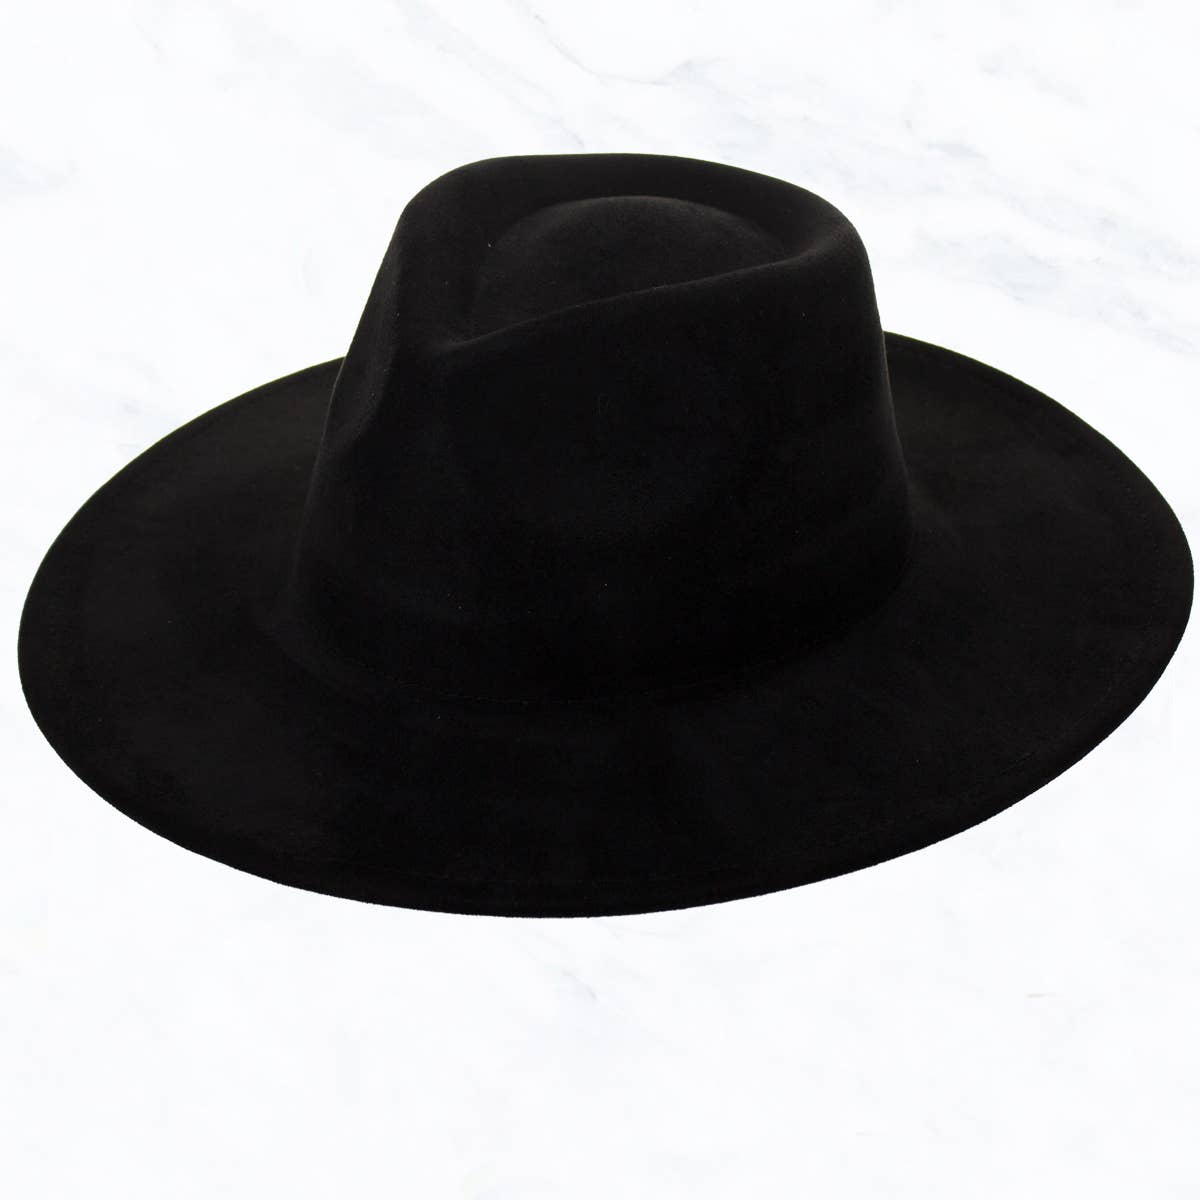 Suzie Q USA - Suede Large Eaves Teardrop Top Fedora Hat: Light Grey